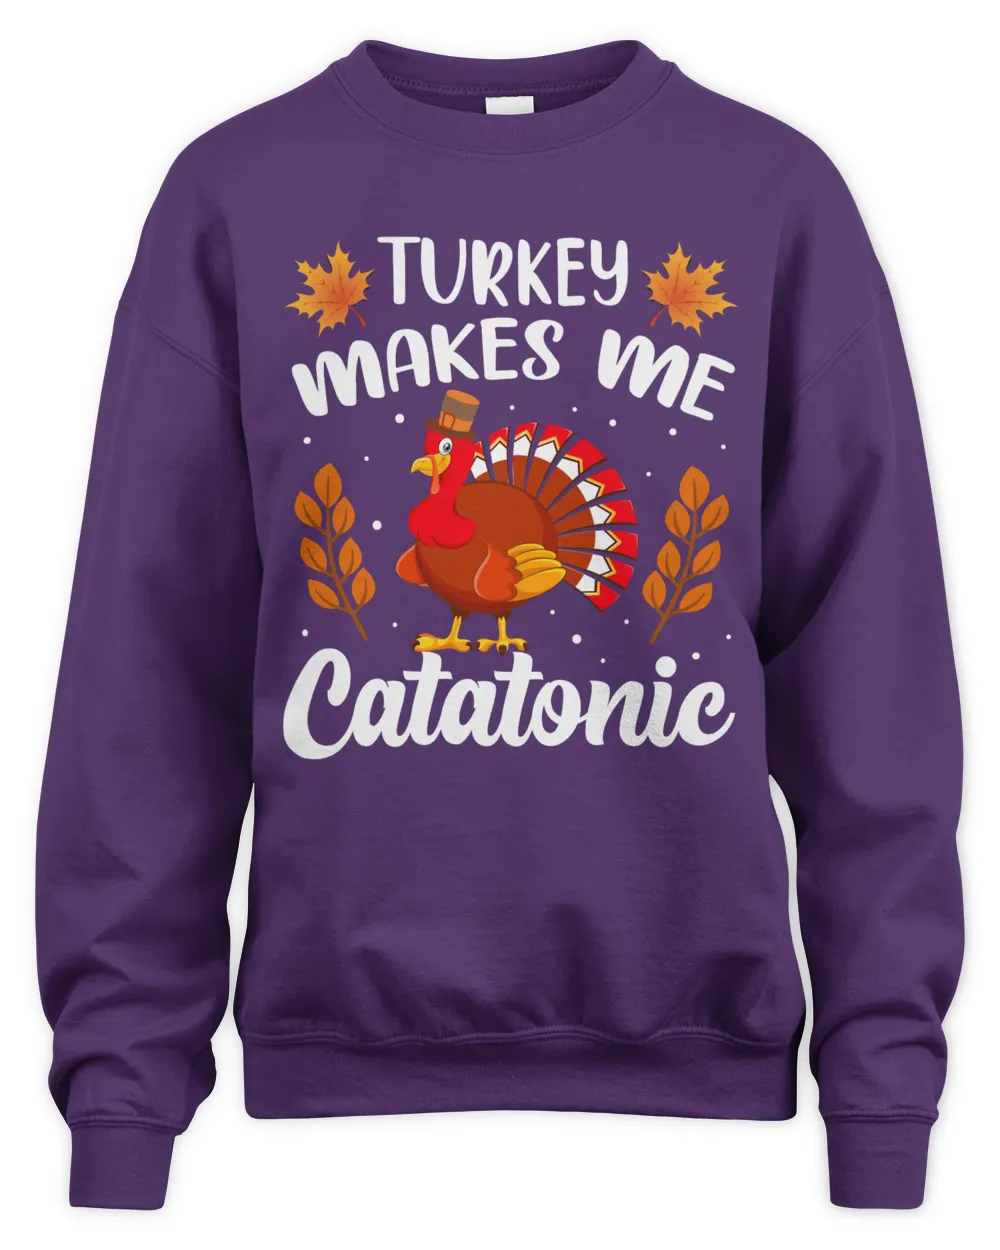 Turkey makes me catatonic